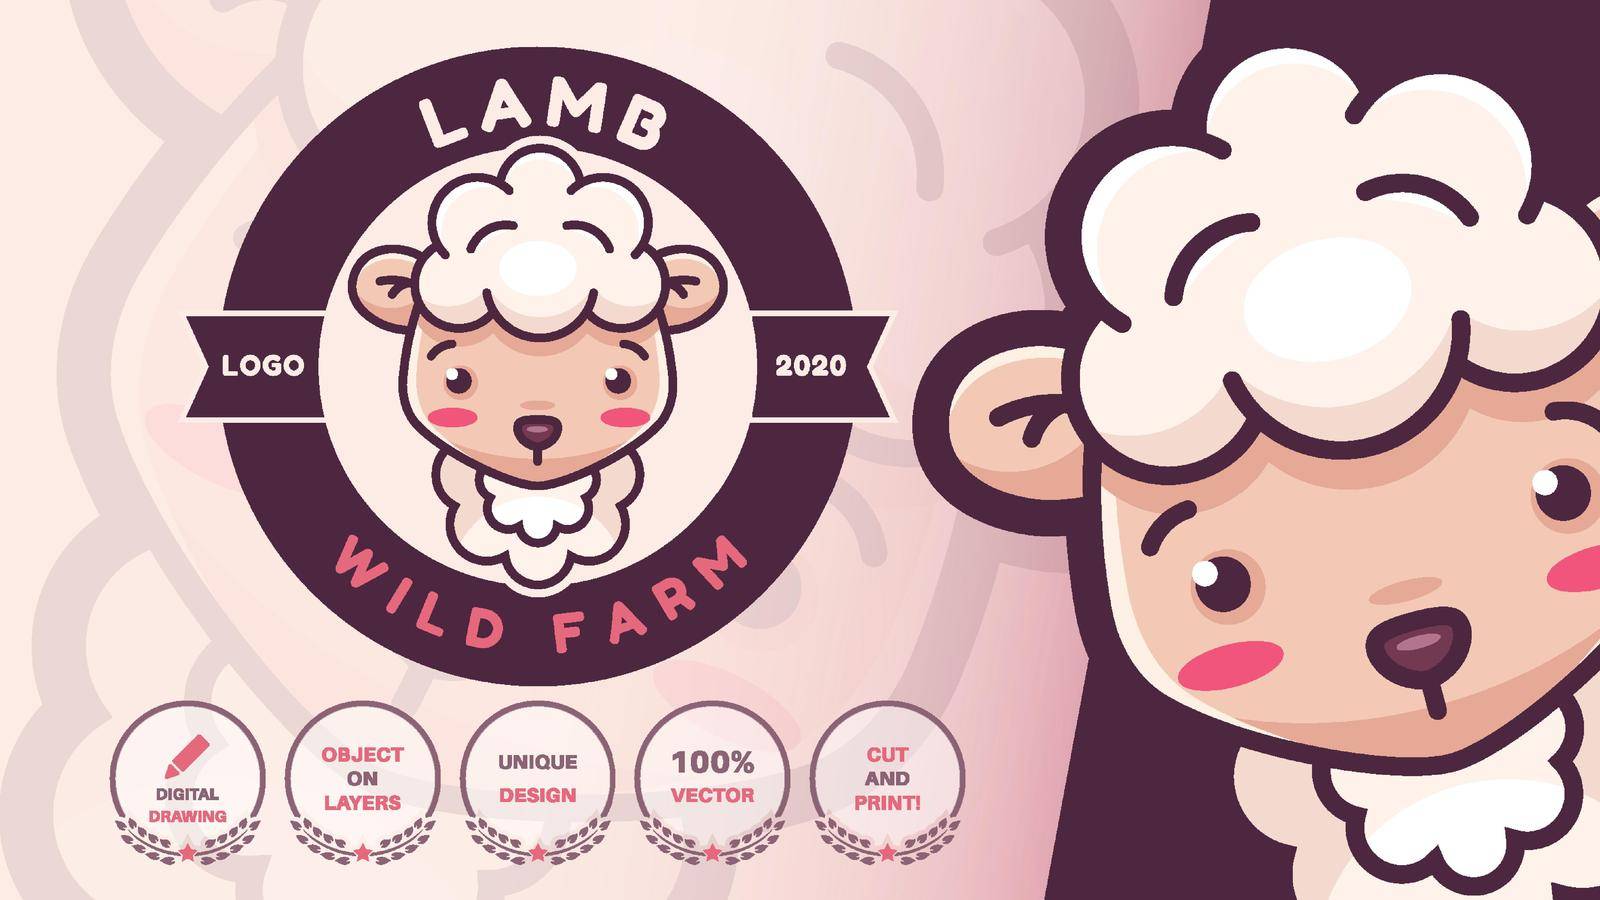 Cartoon character adorable animal lamb logo. Vector eps 10